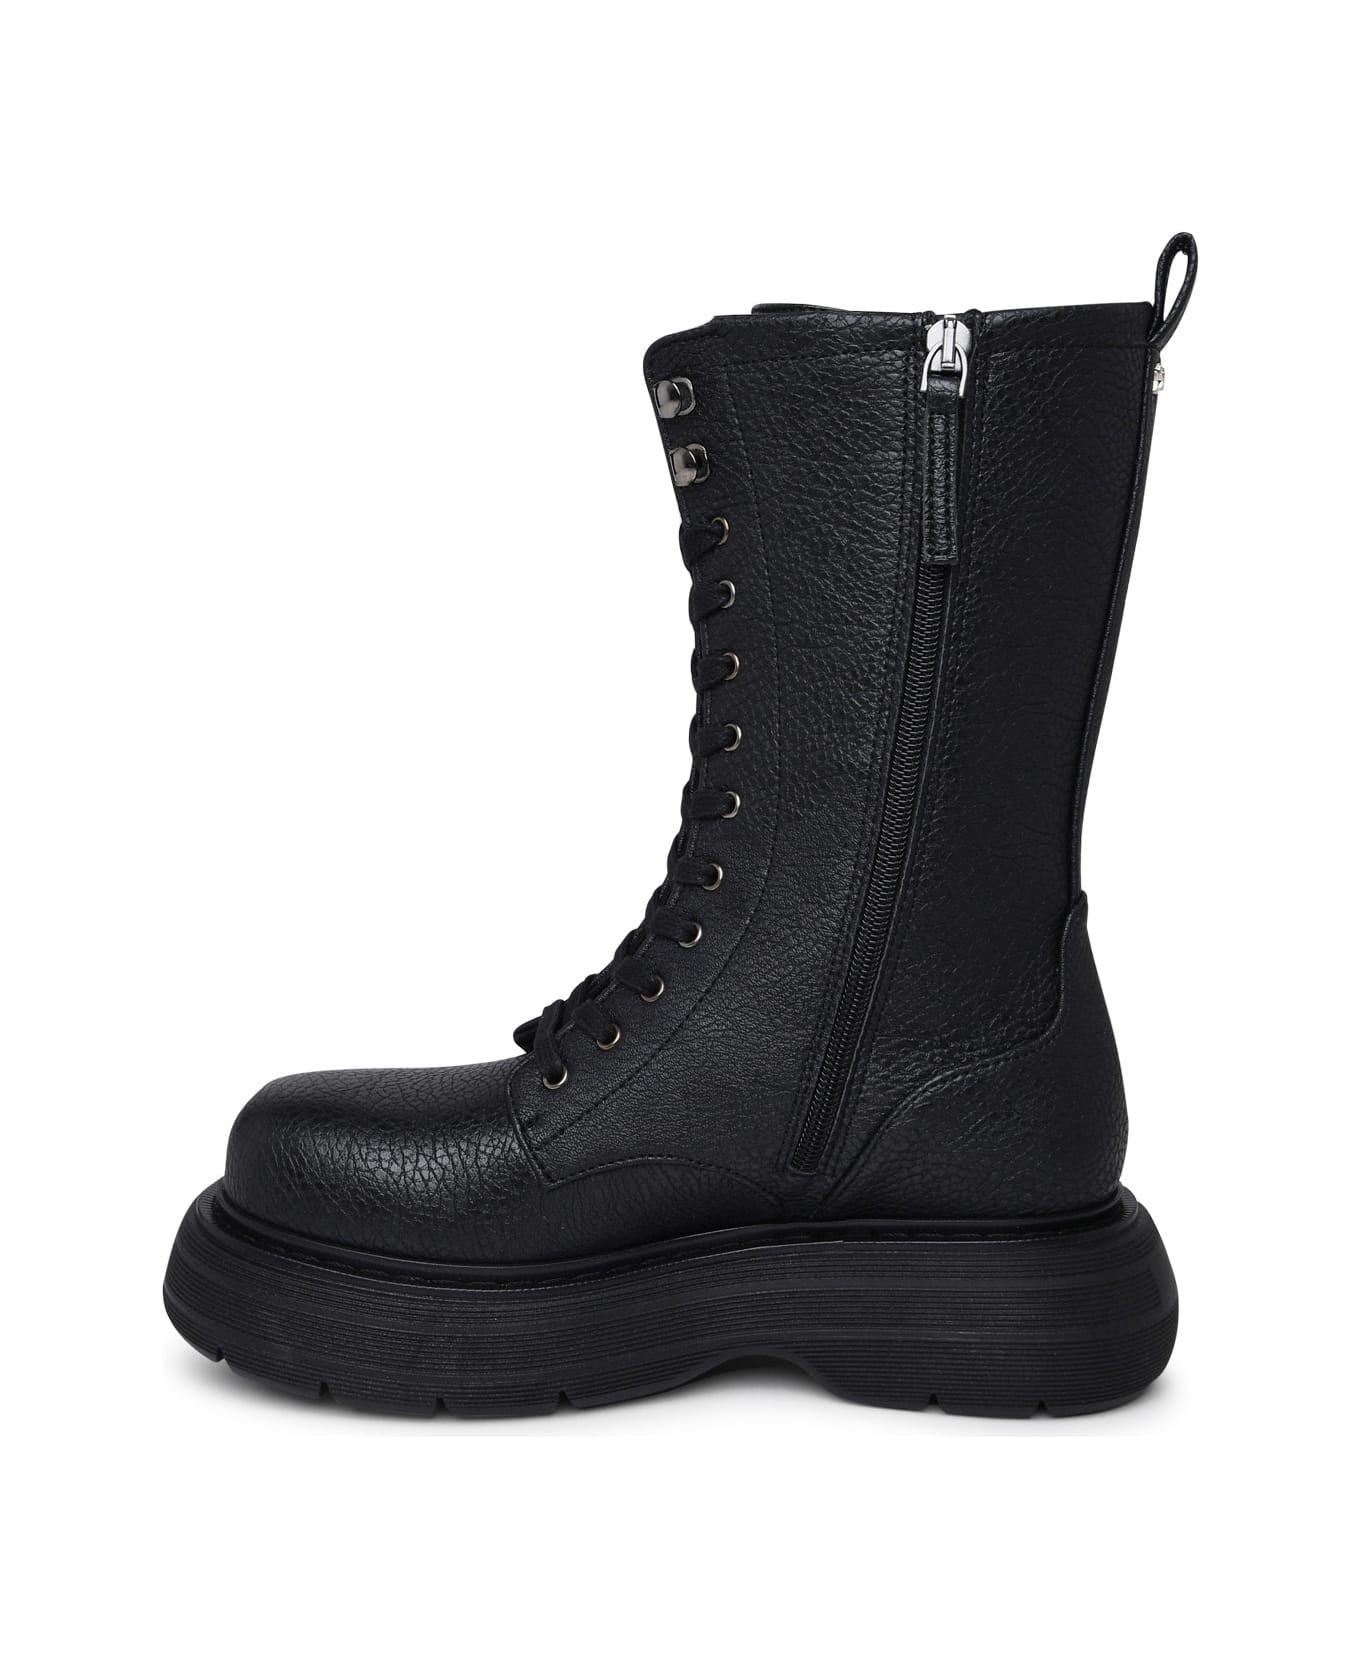 Chiara Ferragni 'ghirls' Black Hammered Leather Amphibious Boots - Black